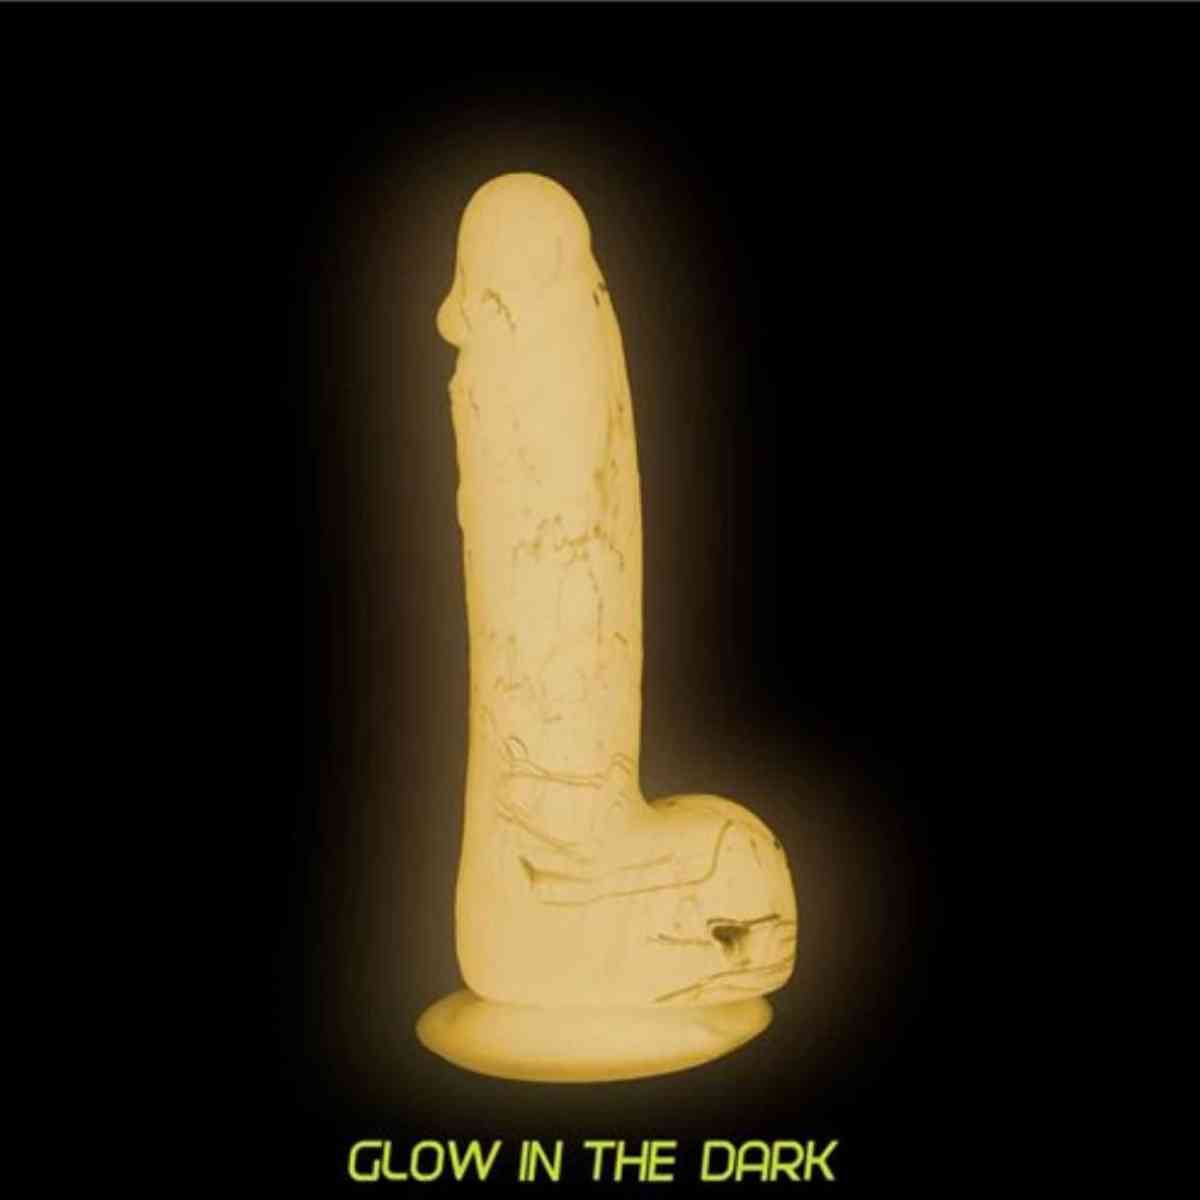 Dildo Brandon"Glow in the Dark" im Dunkeln